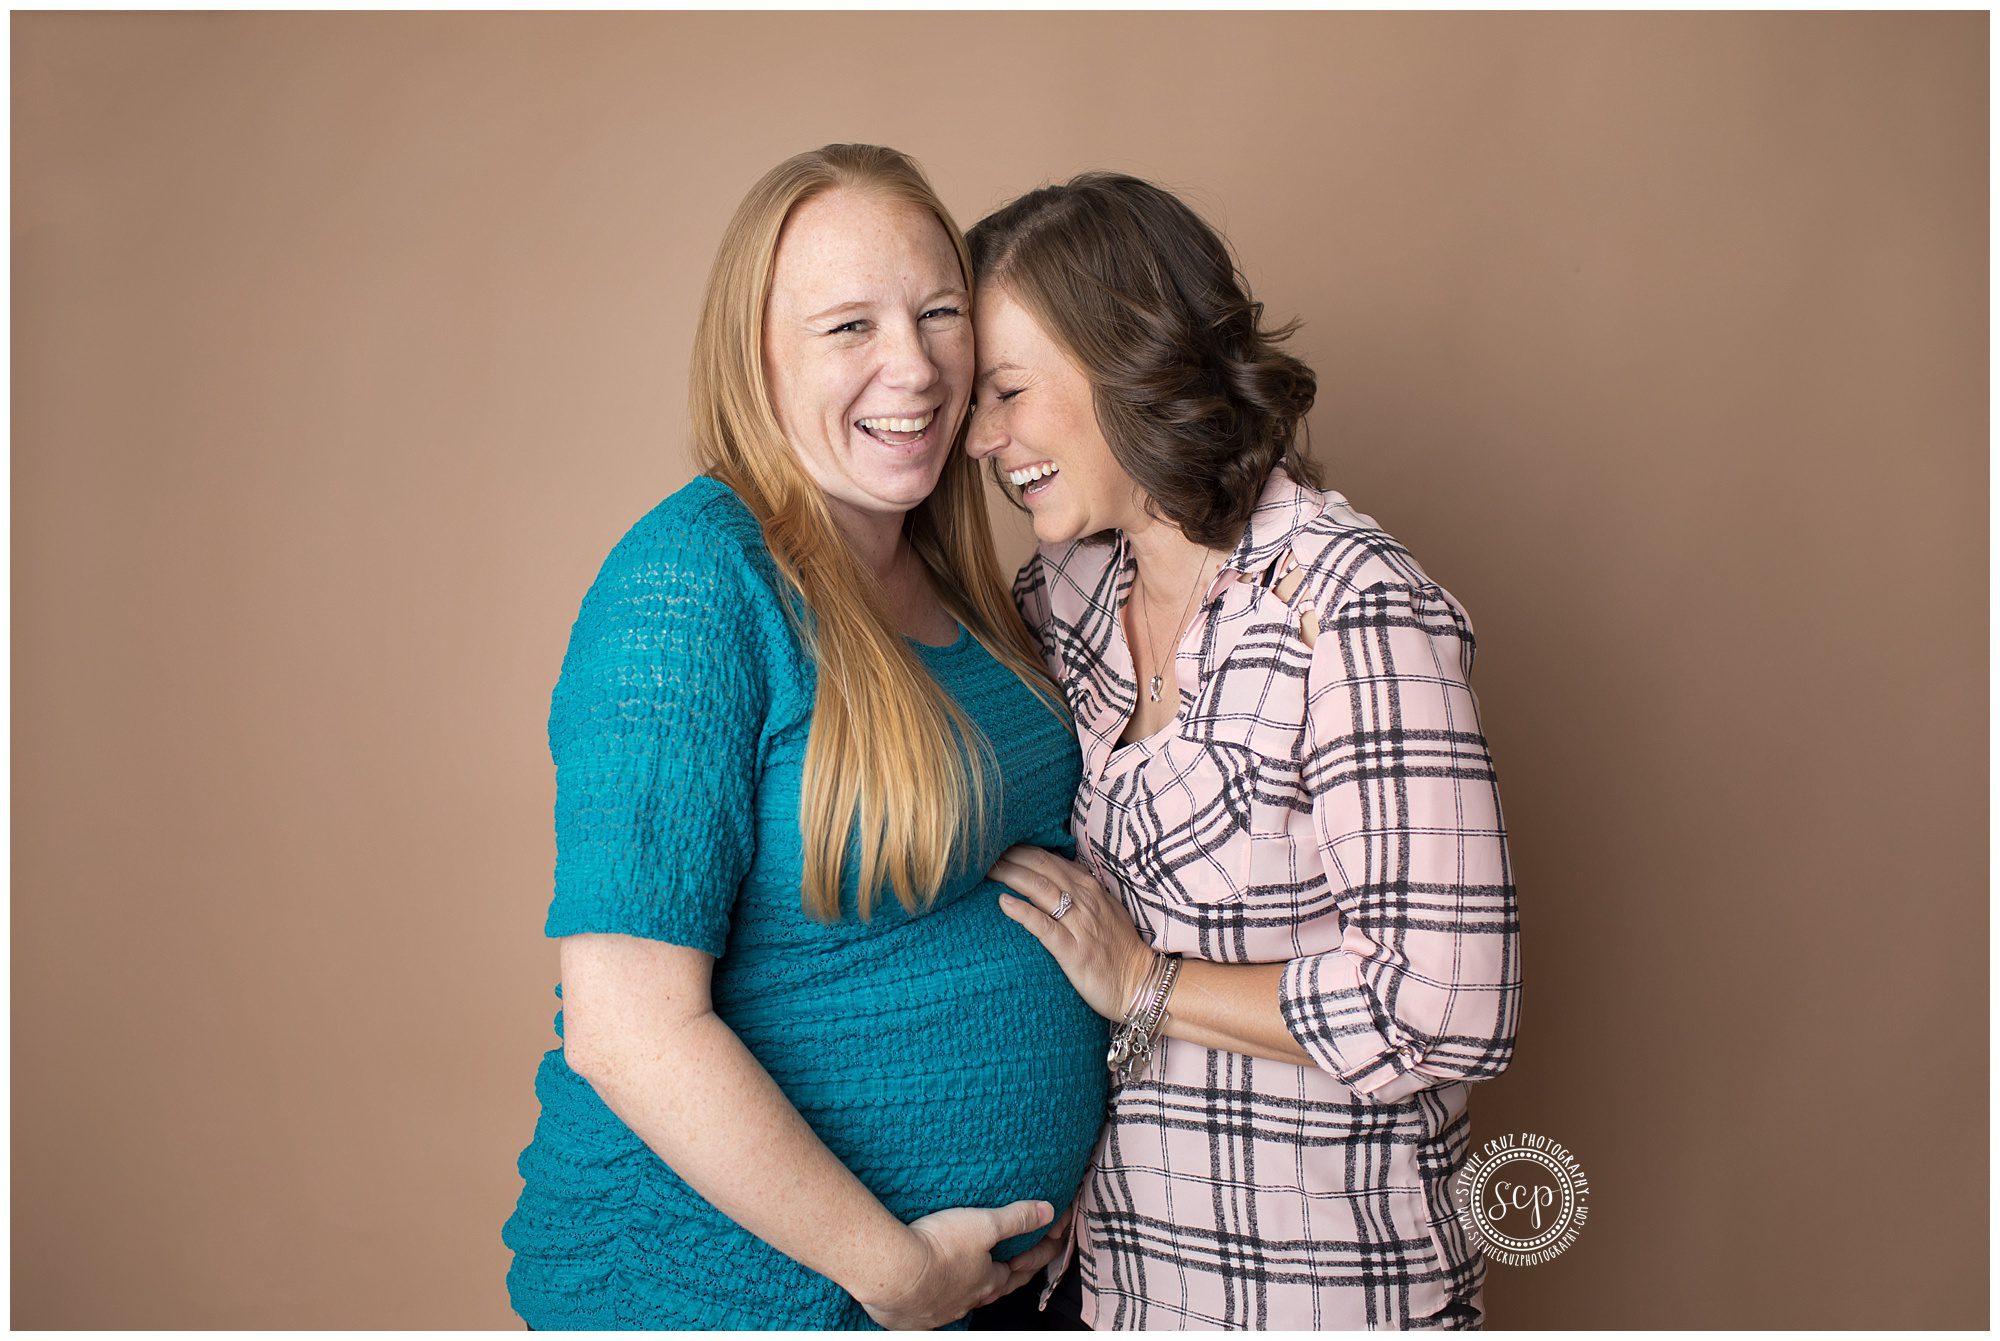 Surrogate Maternity sisters